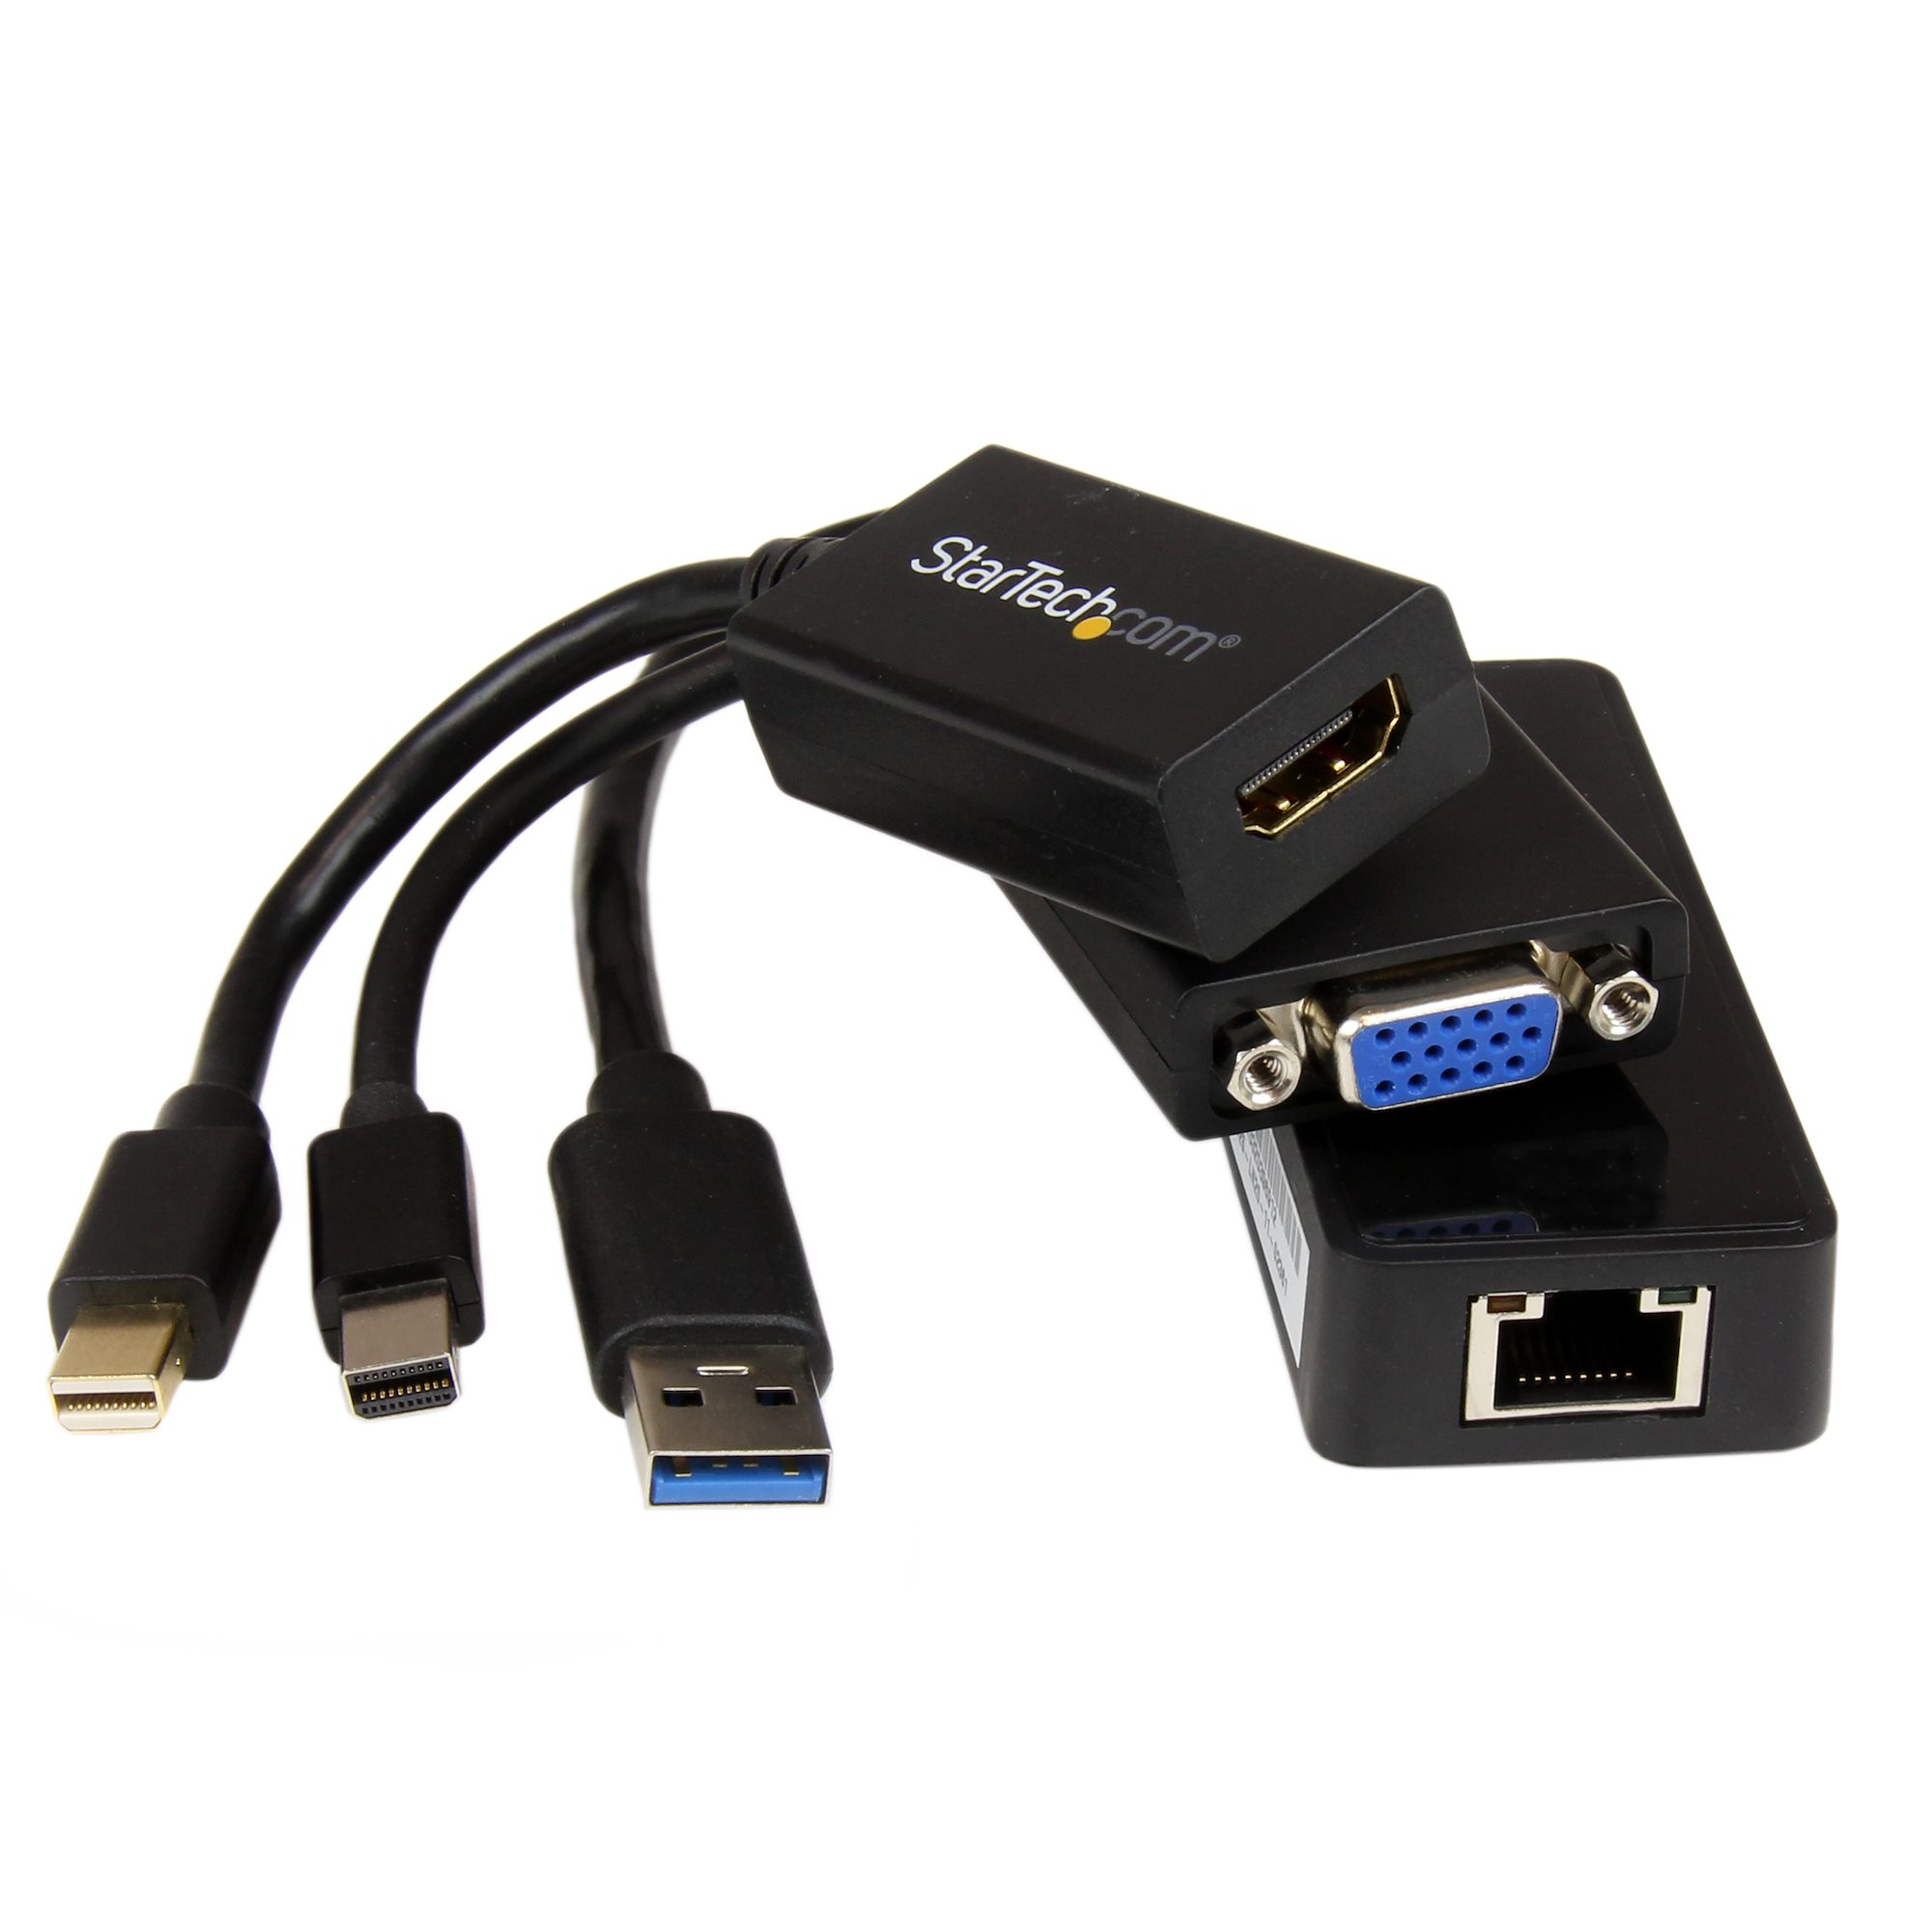 Surface Pro HDMI / GbE Adapter Kit - Connectivity Kits | StarTech.com